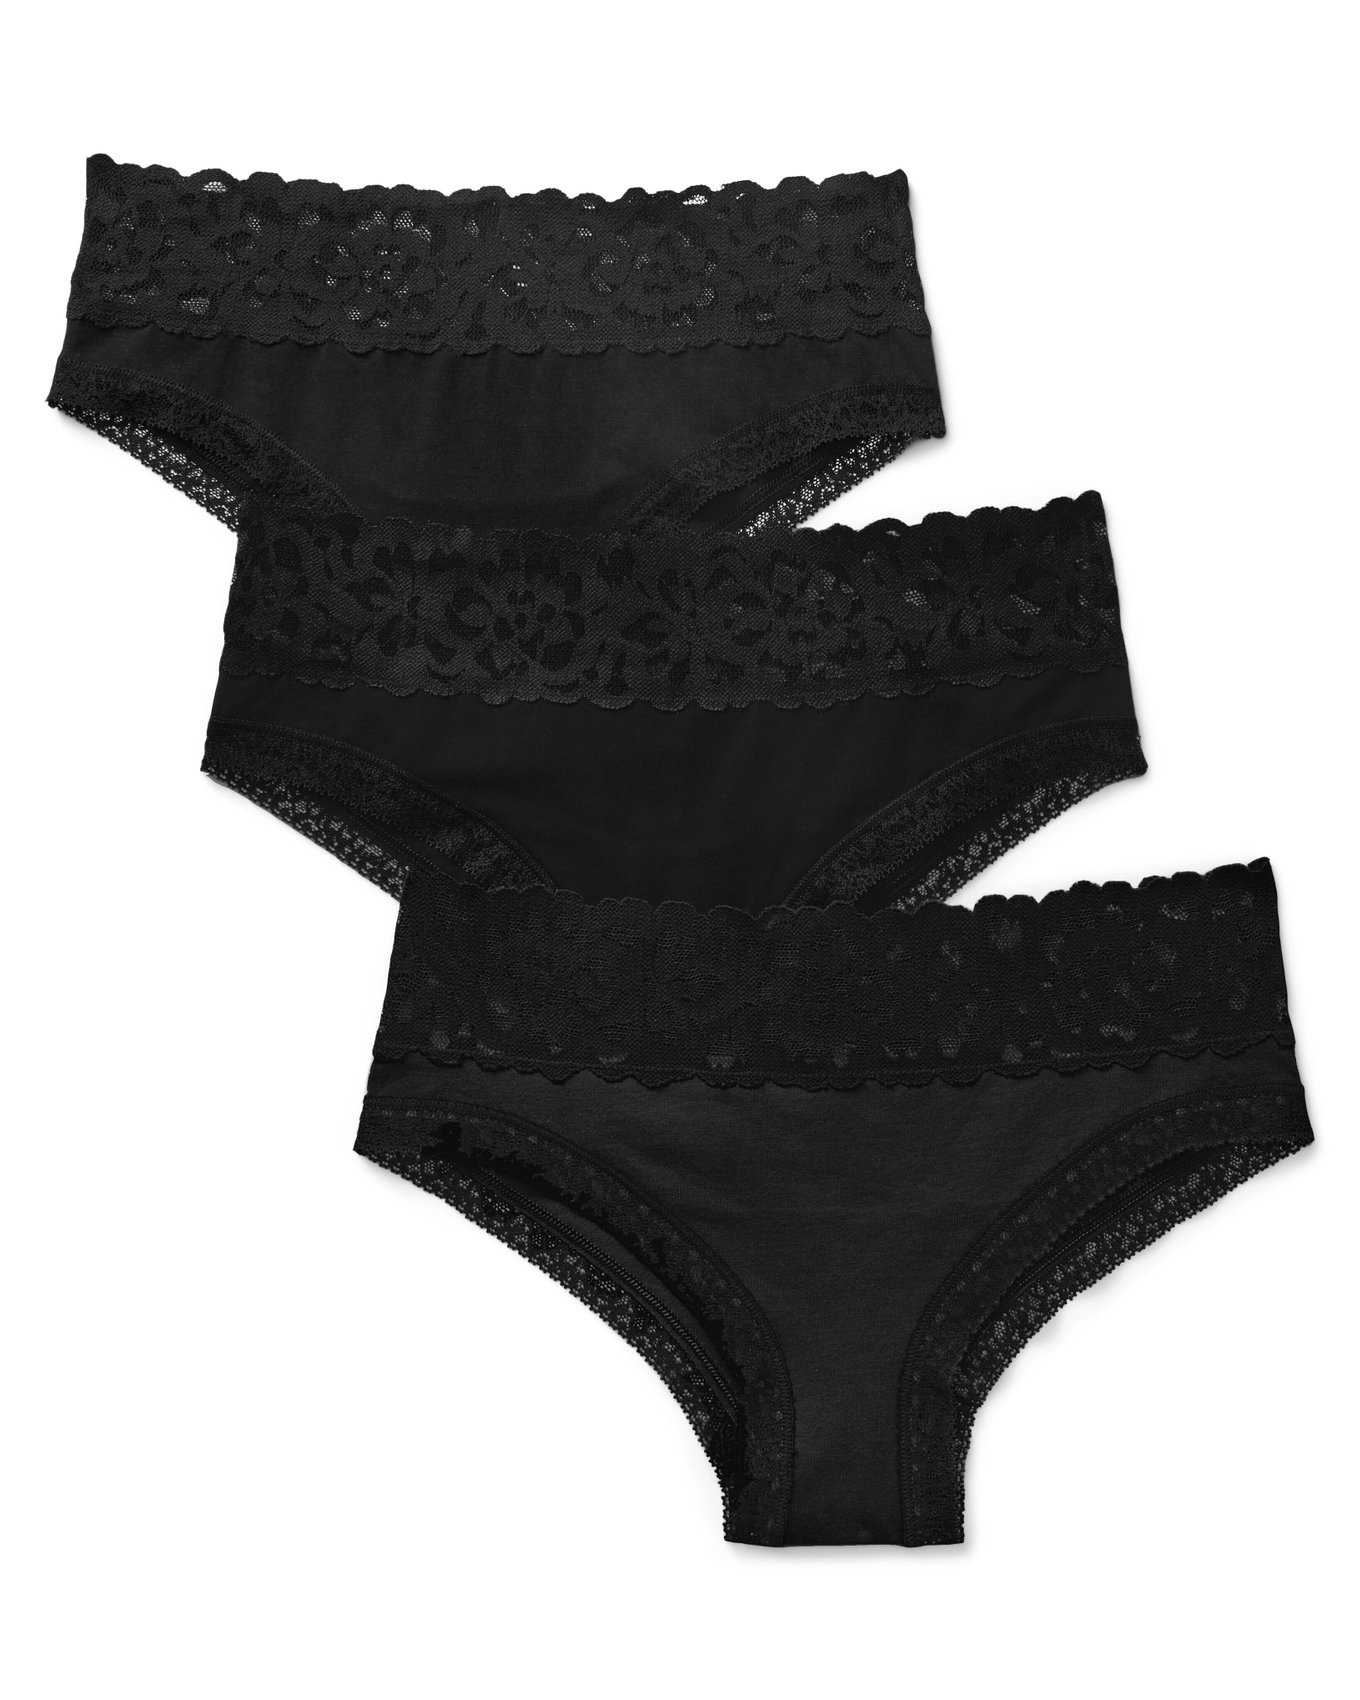 Mackenna Cotton Pack Cheeky Black 2 Cheeky Panties (Pack of 3)